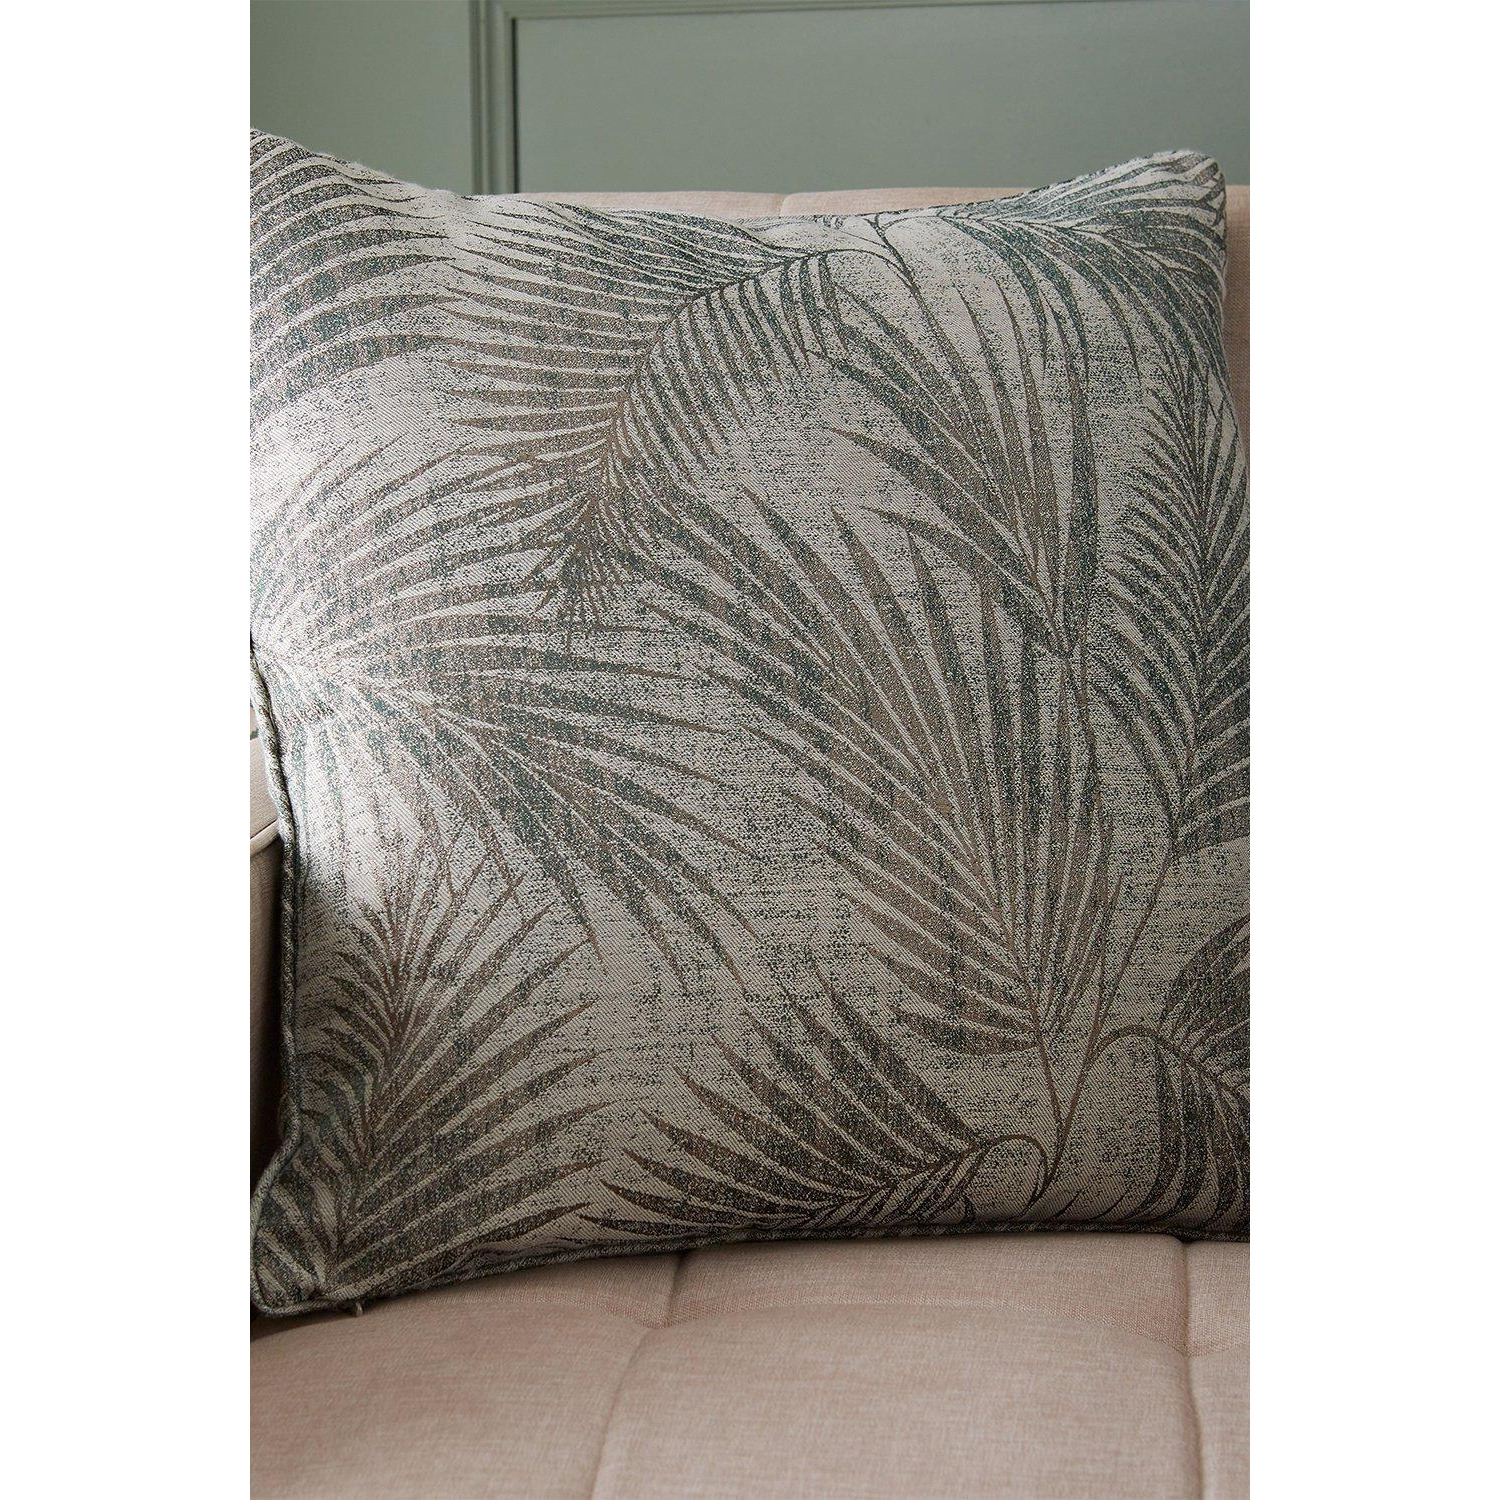 'Tamra Palm' Cushion - image 1